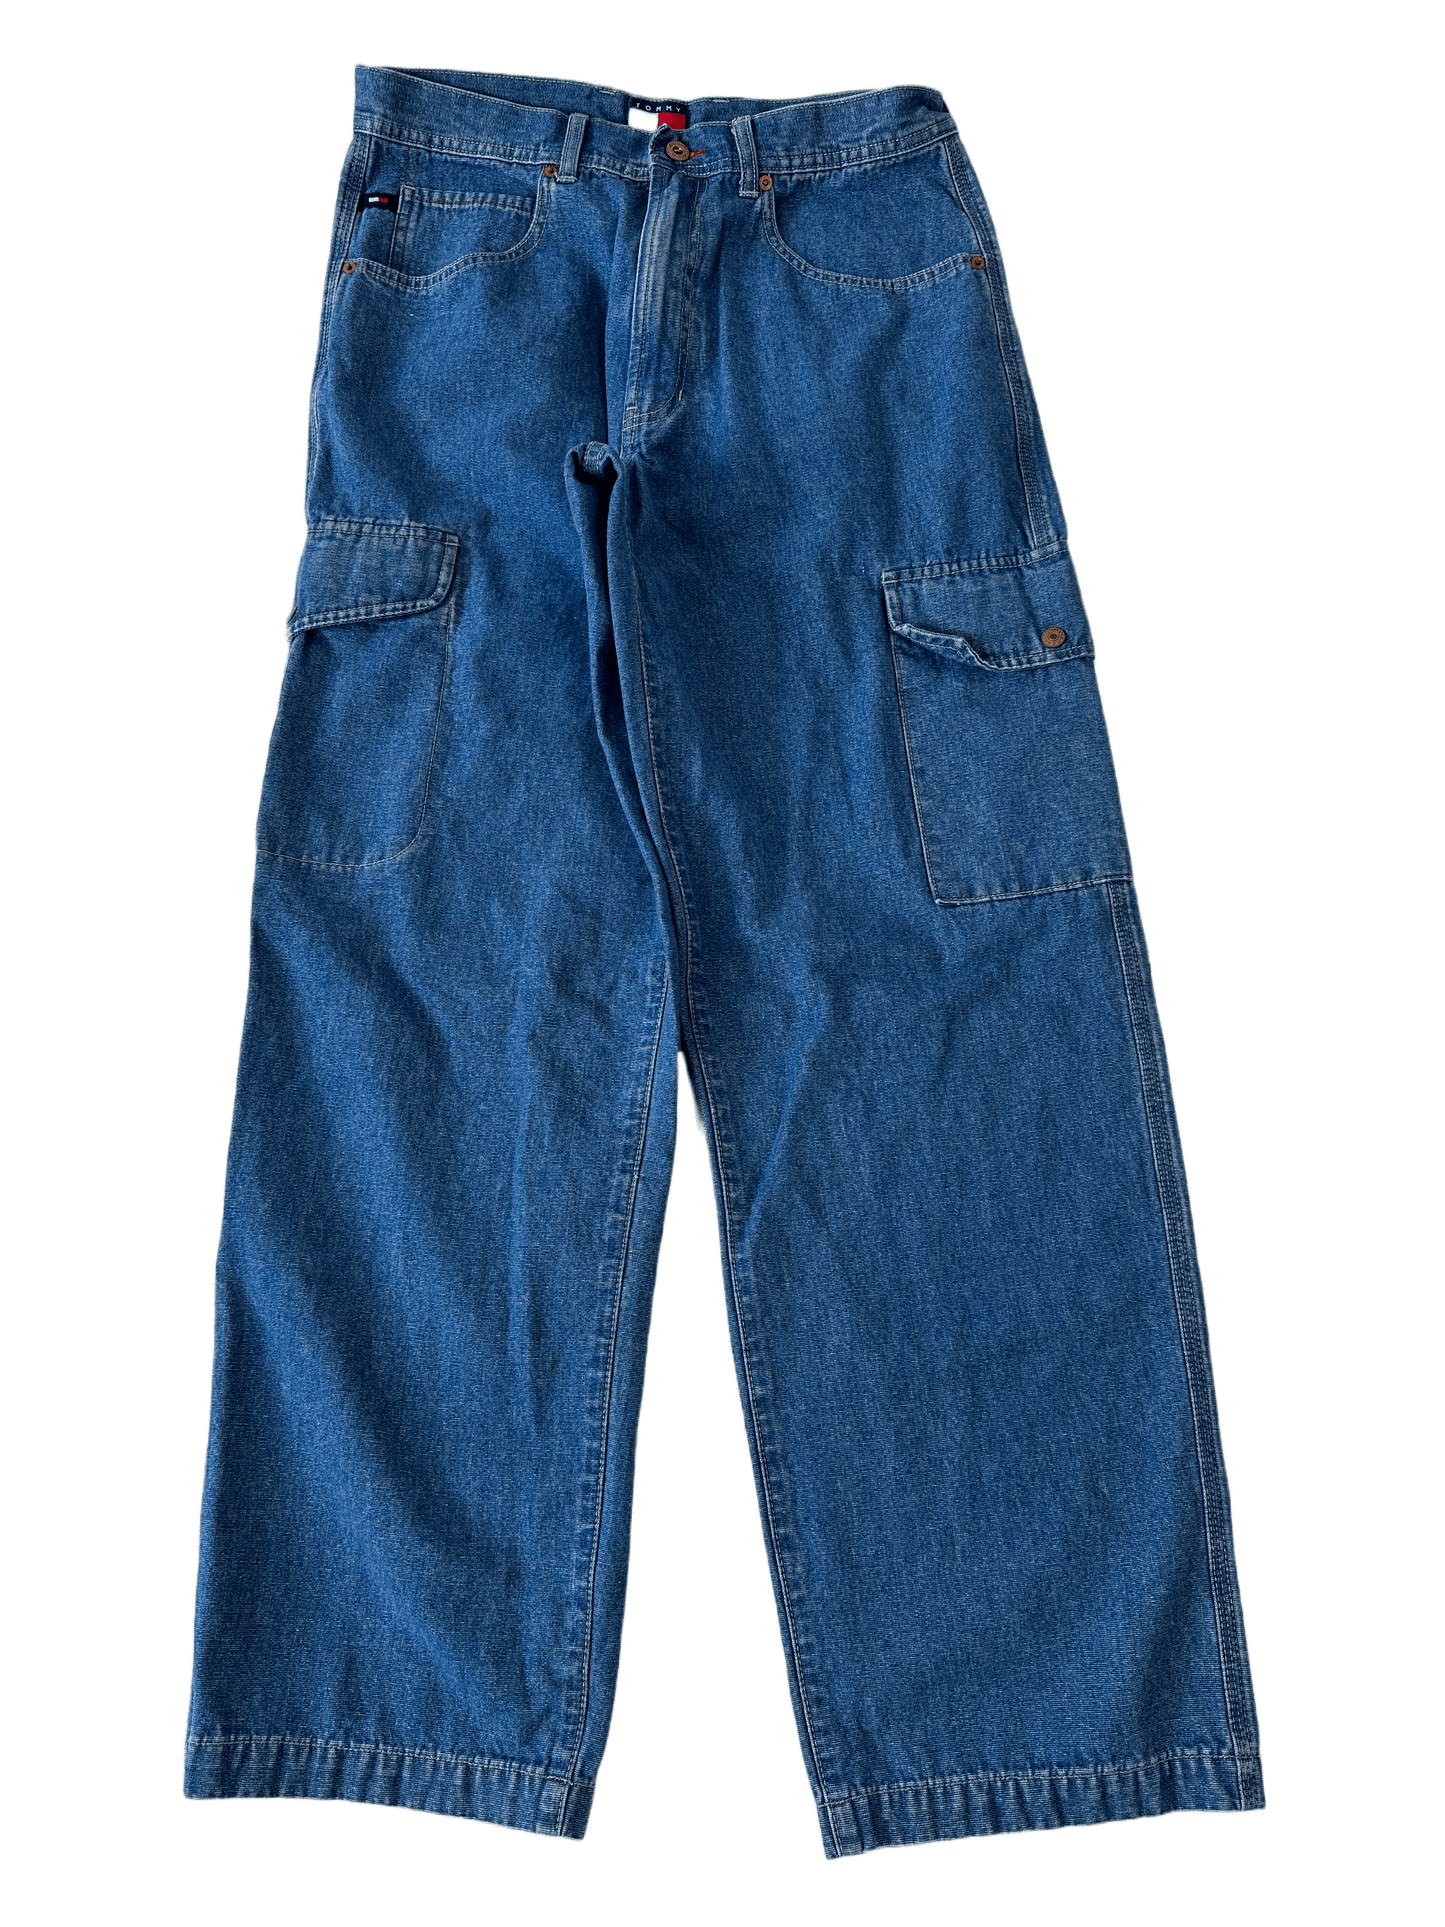 Tommy Hilfiger Cargo Vintage Jeans - 32 x 32